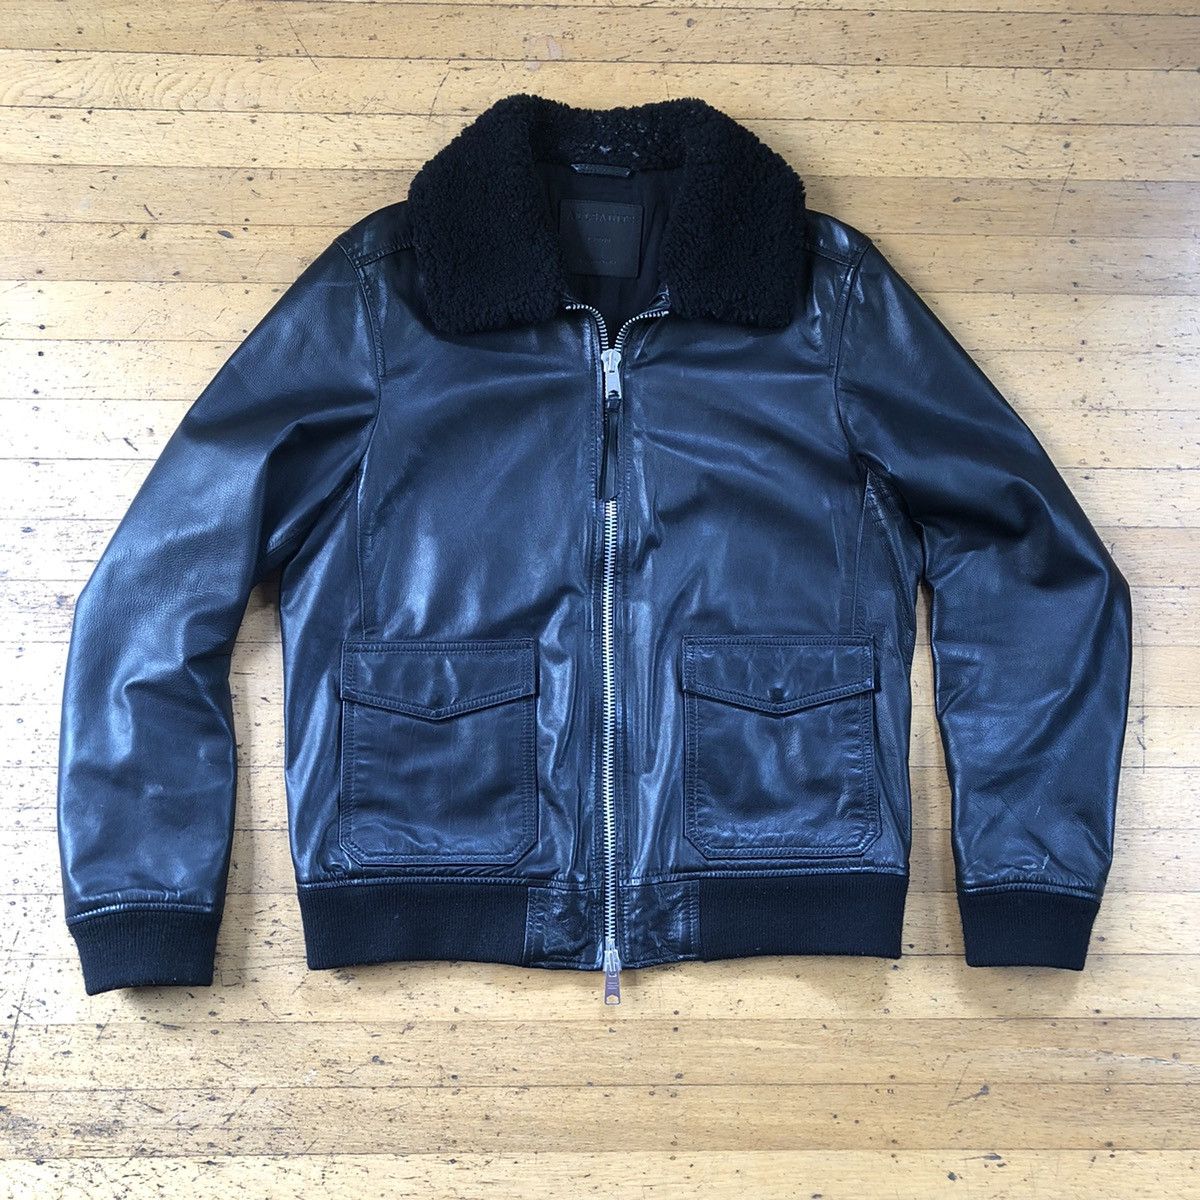 Allsaints All saints Sherpa black leather jacket | Grailed